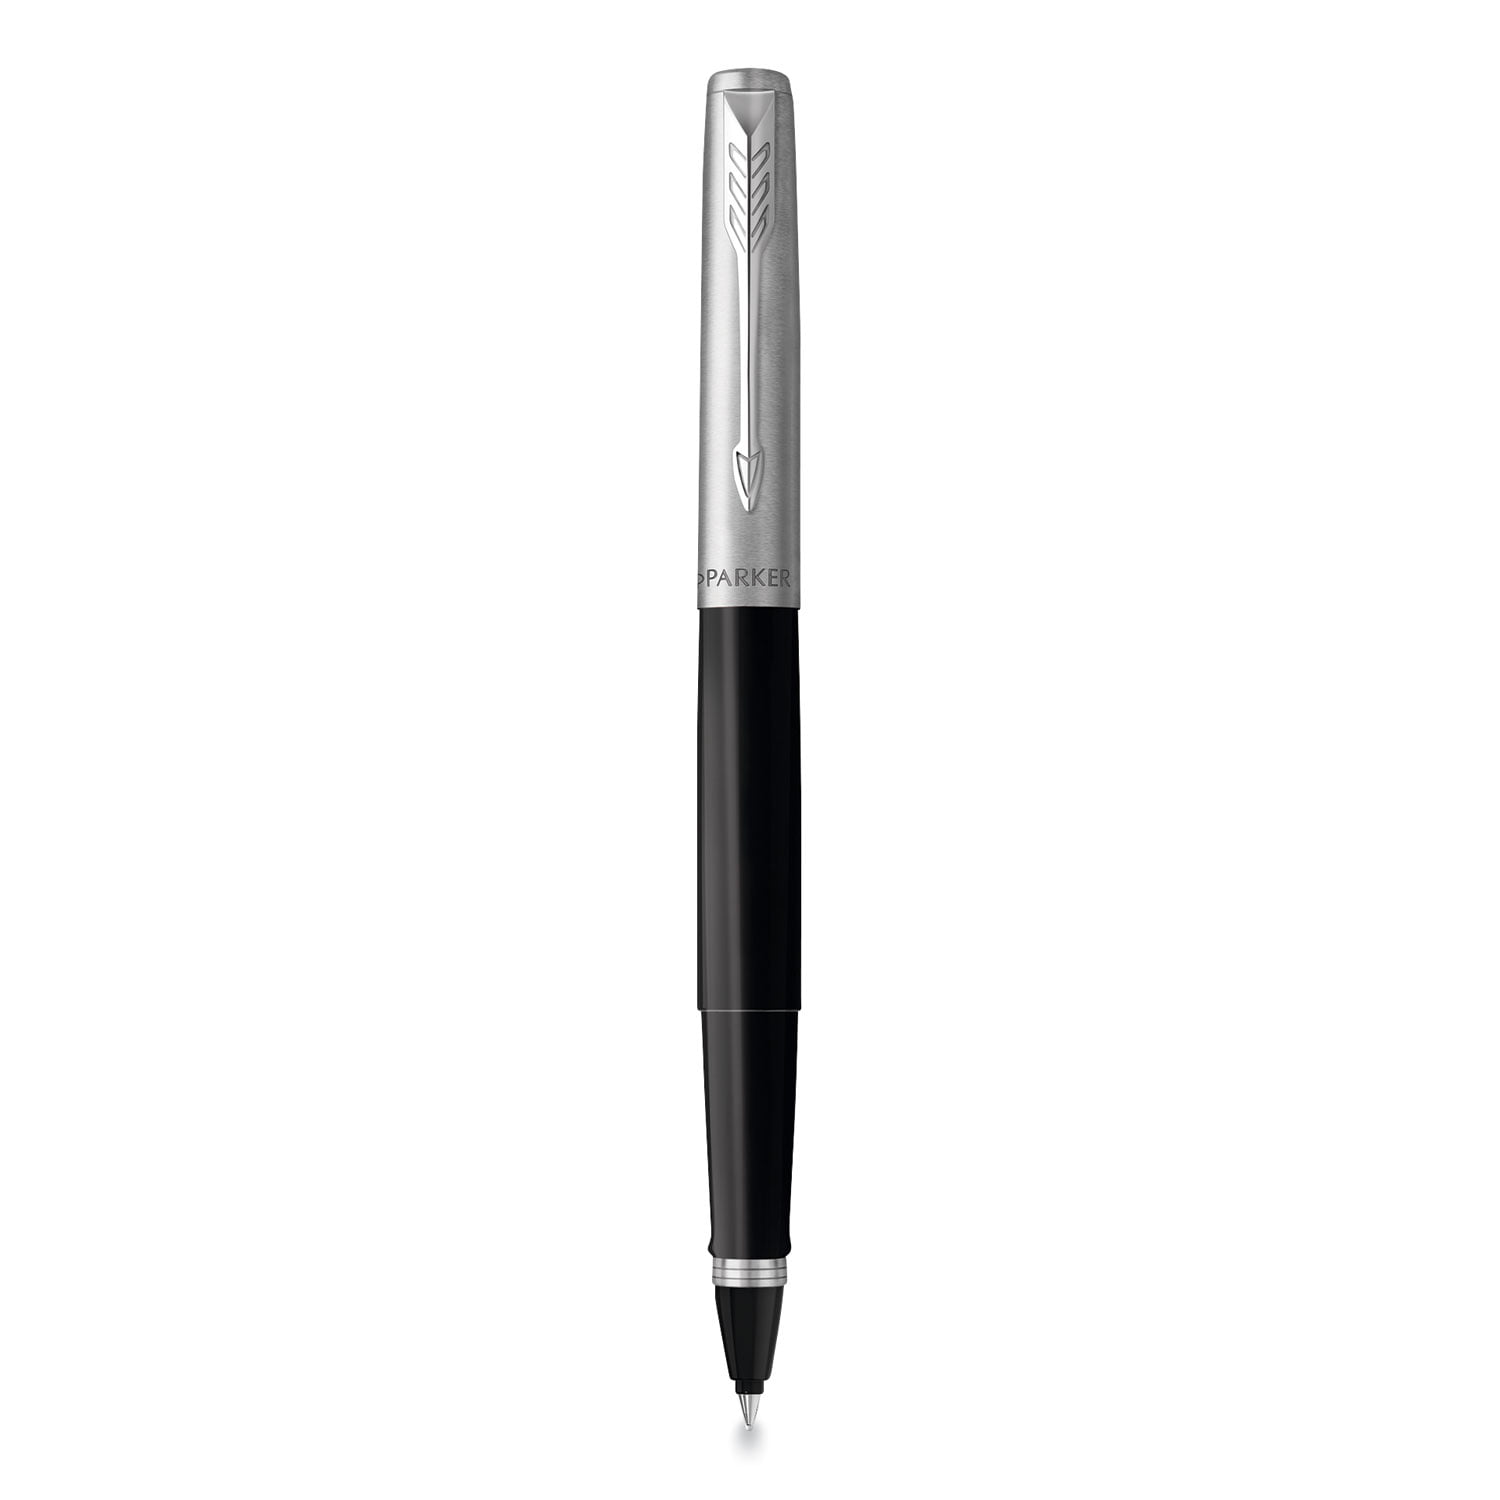 Parker Jotter Originals Ballpoint Pen, Classic Black Finish 